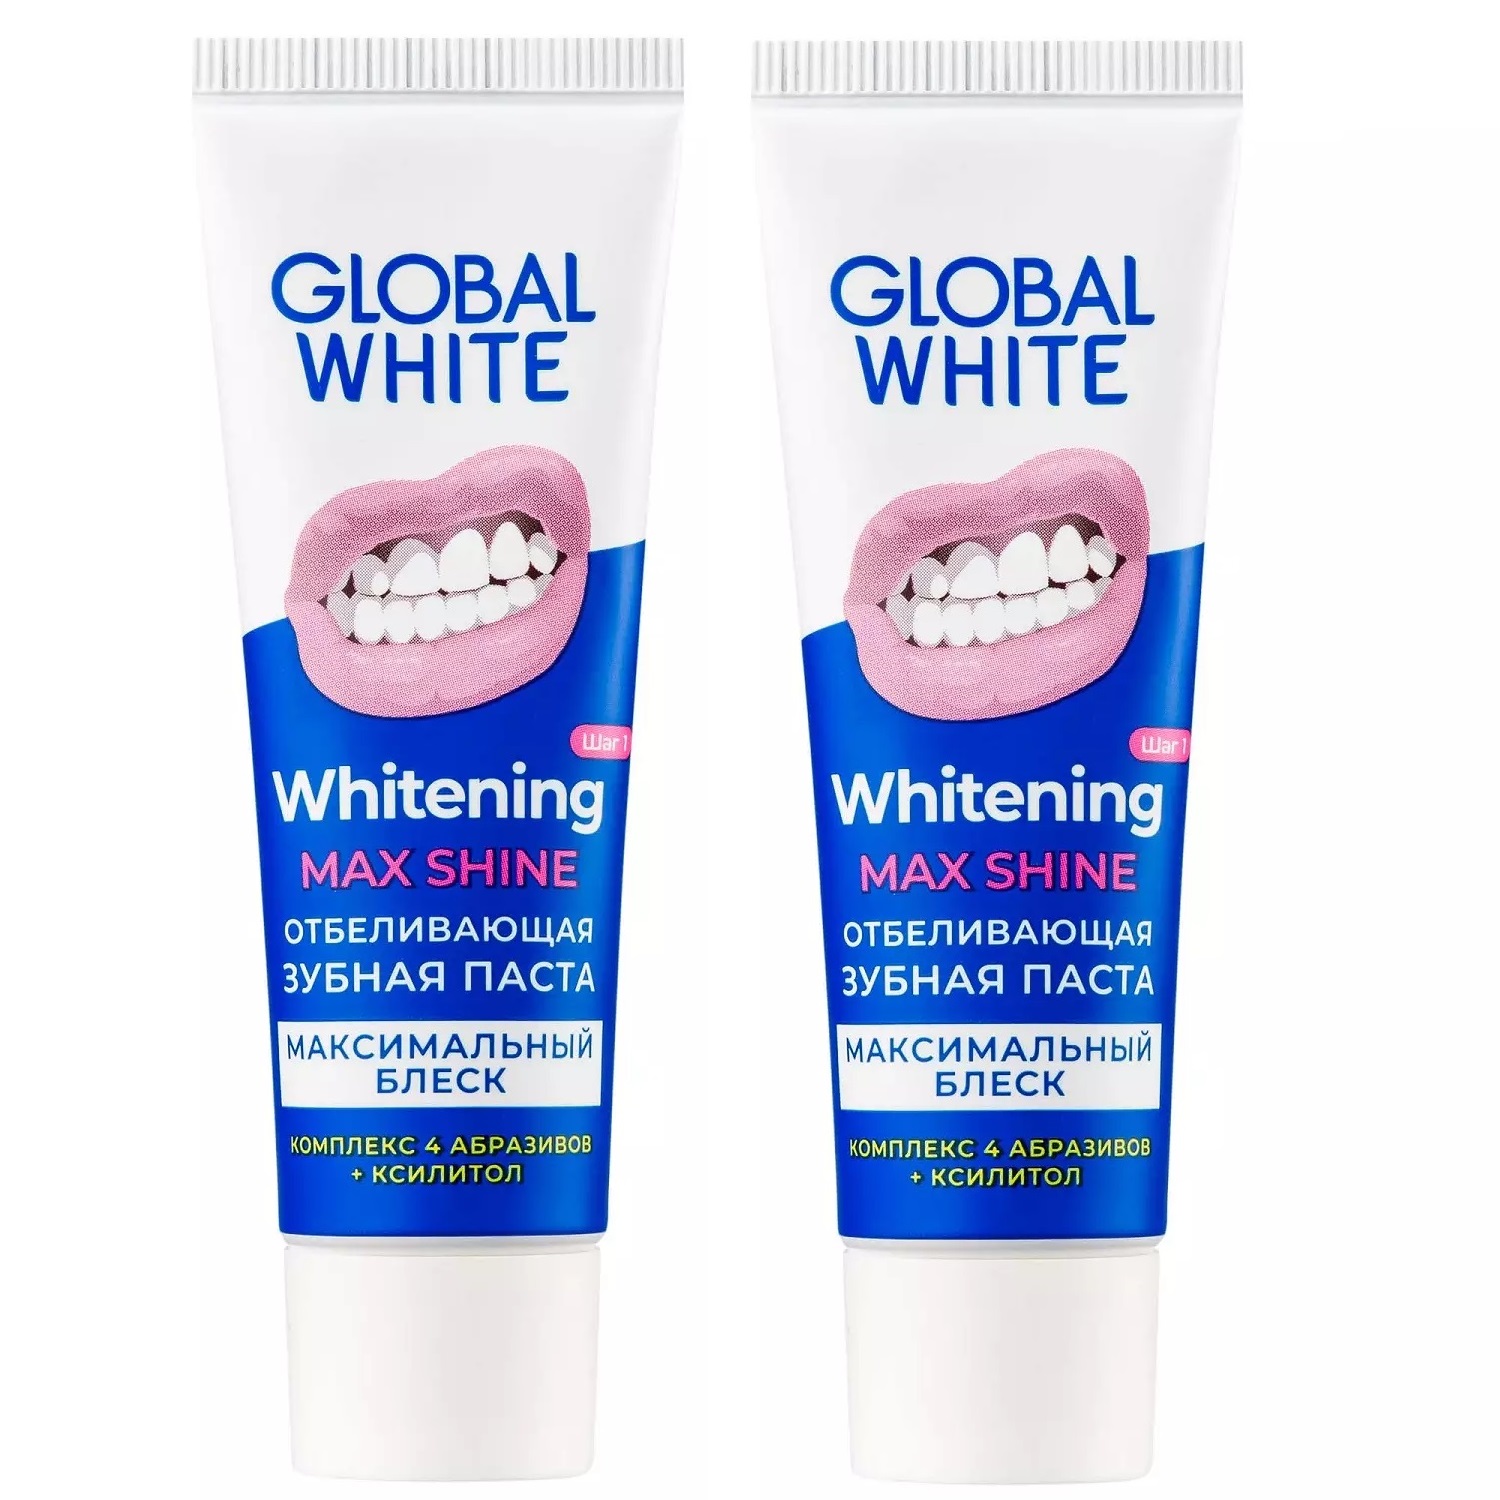 Global White Набор: отбеливающая зубная паста Max Shine, 2 х 30 мл (Global White, Подготовка к отбеливанию) global white отбеливающая зубная паста max shine 30 мл global white подготовка к отбеливанию